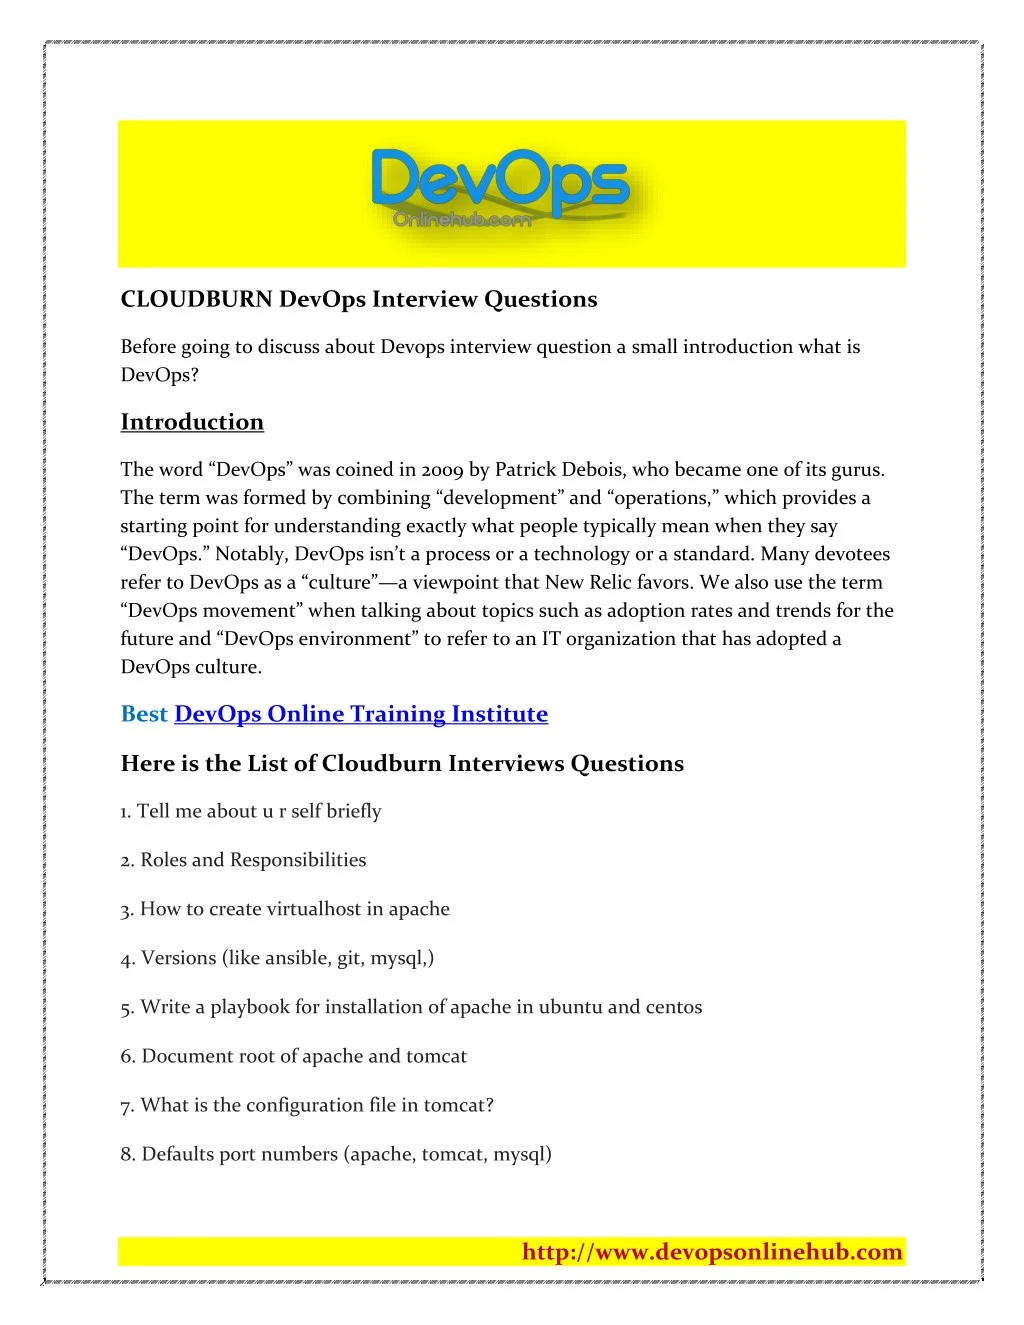 cloudburn devops interview questions